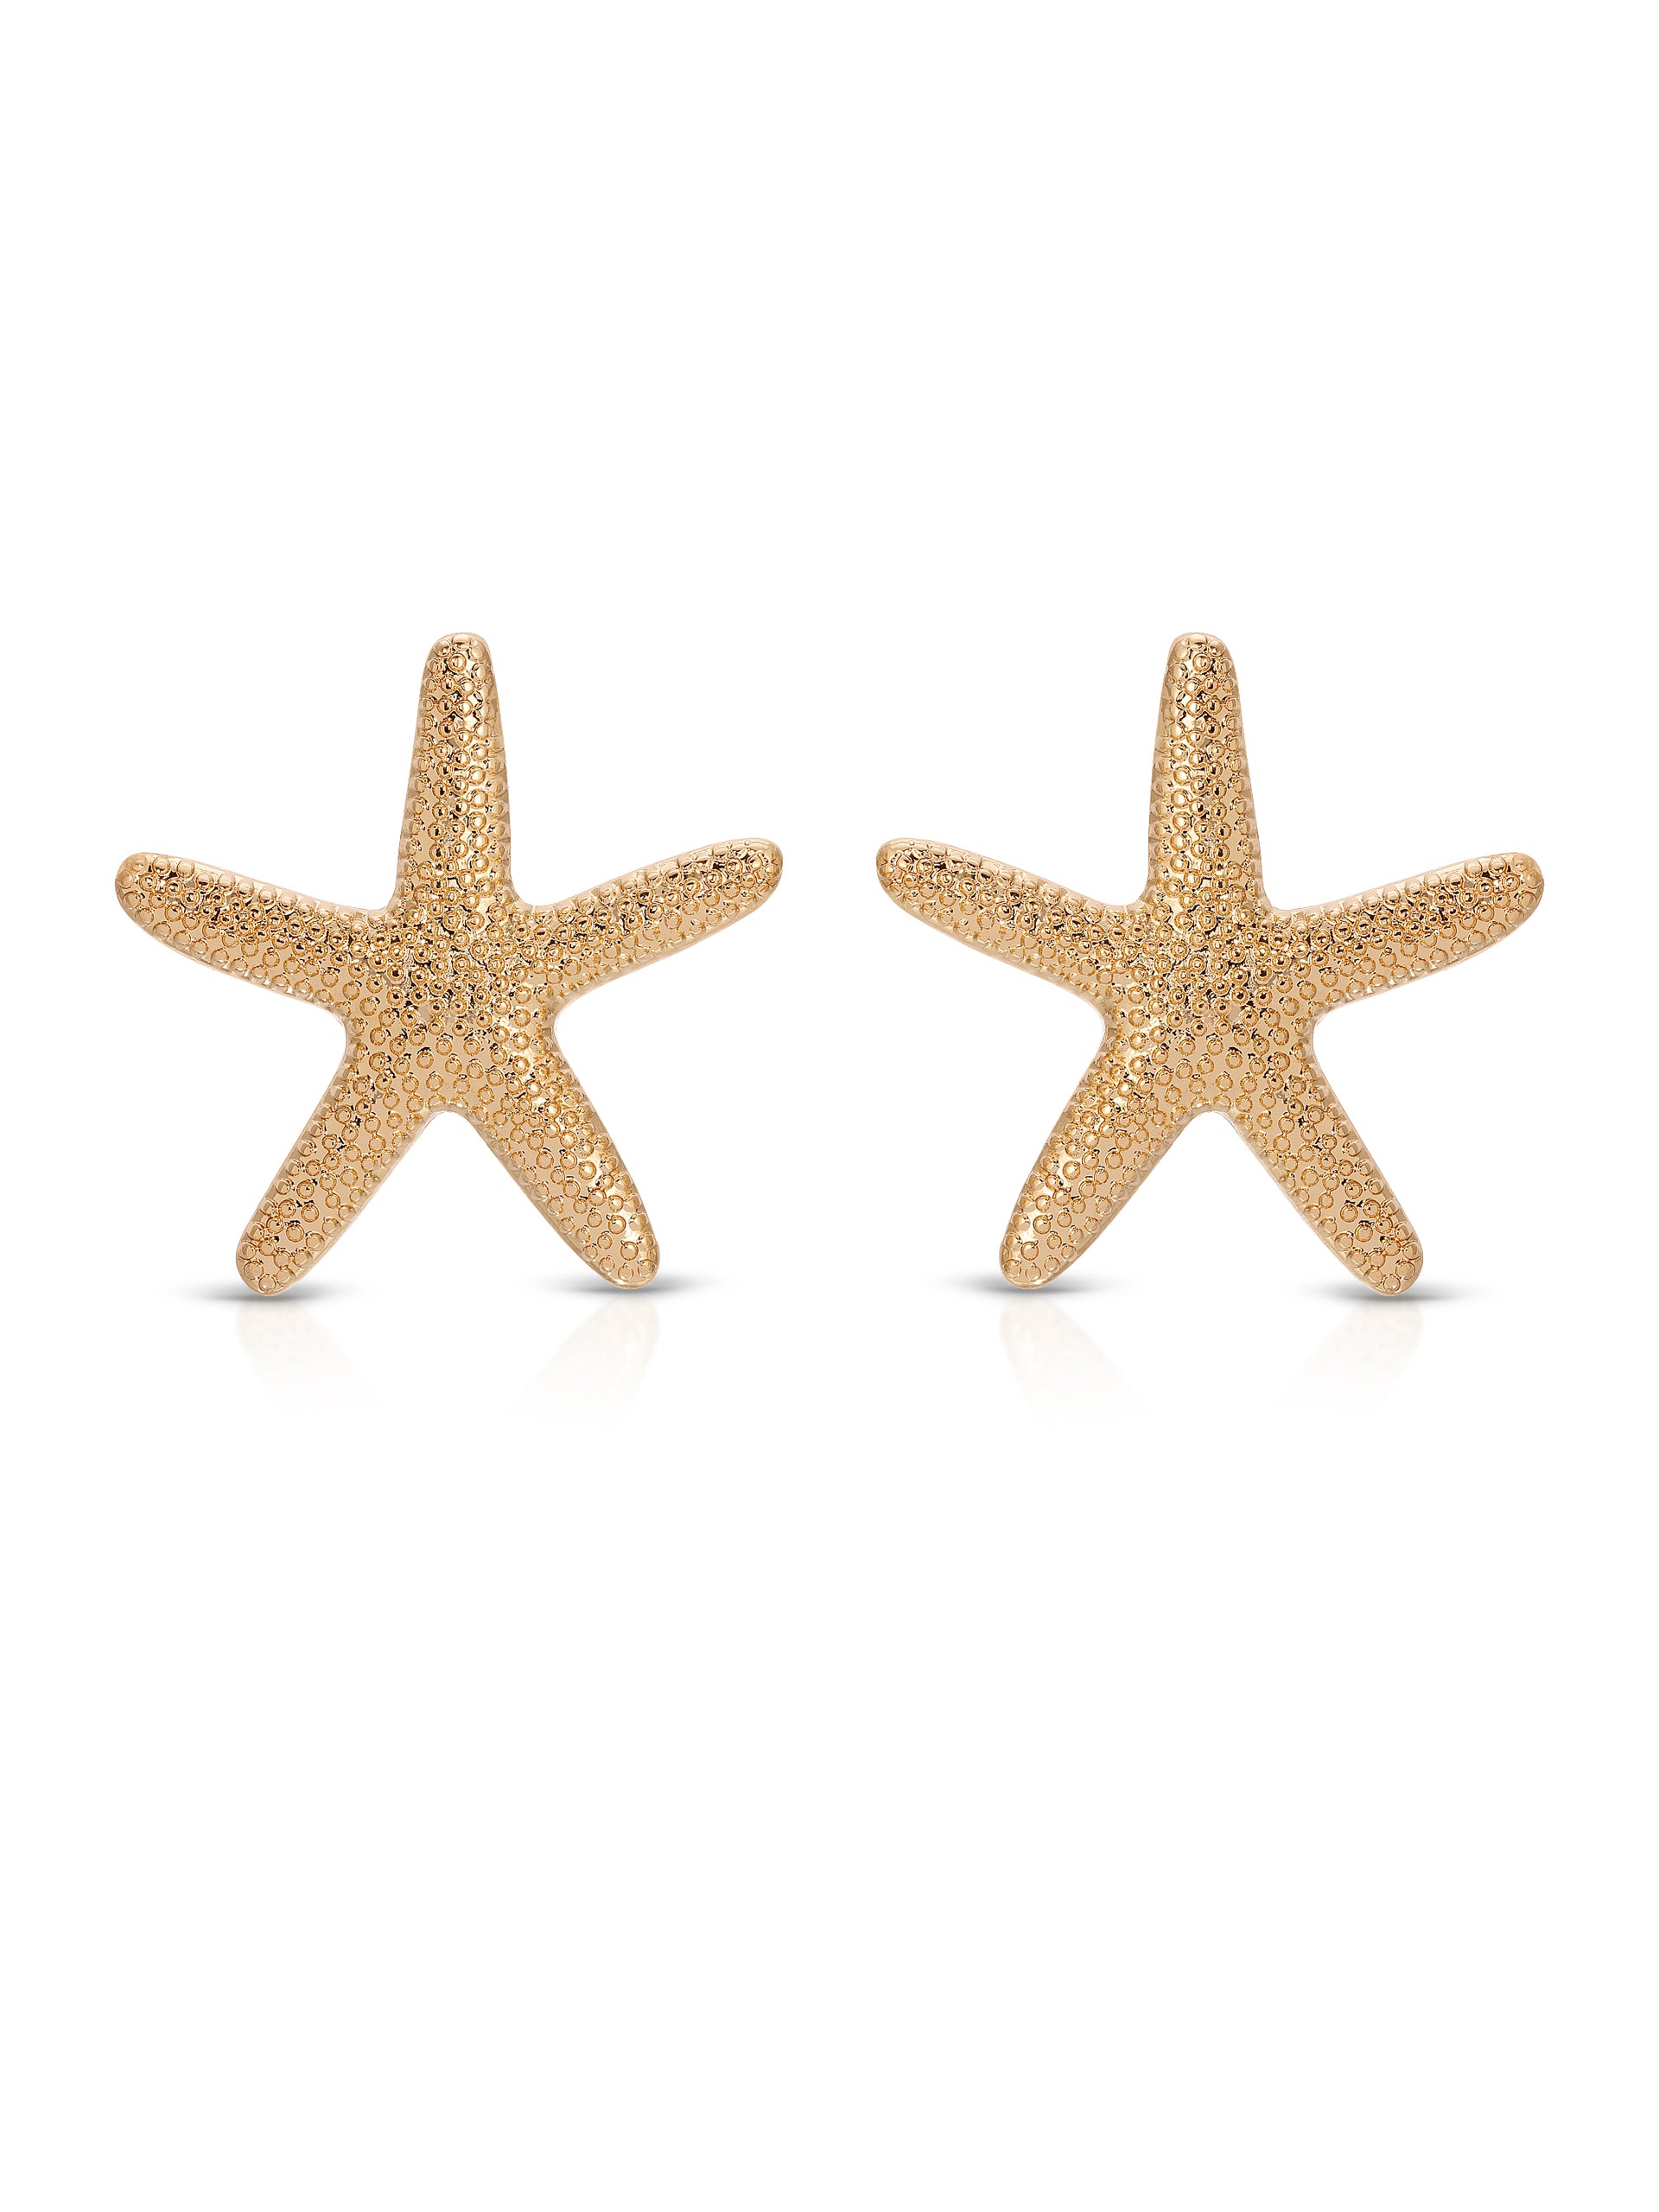 Statement Starfish Stud Earrings